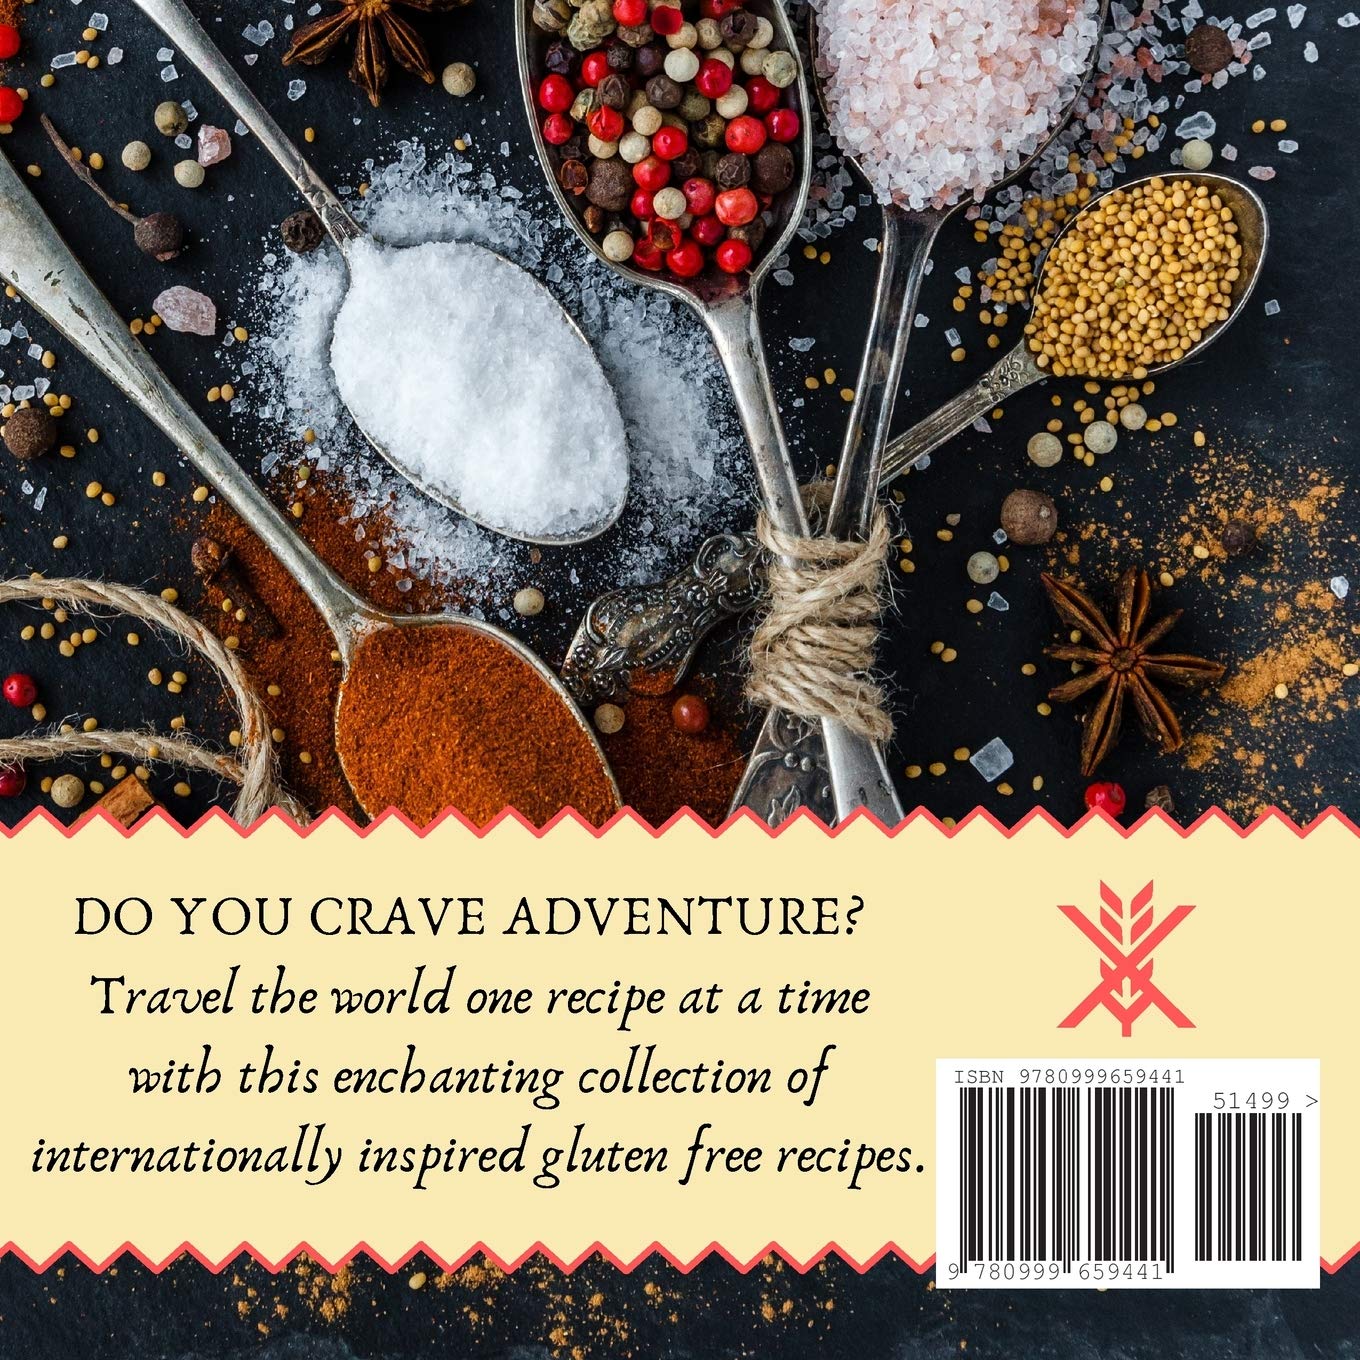 Gluten Free World Tour Cookbook: Internationally Inspired Gluten Free Recipes (Cooking Squared)